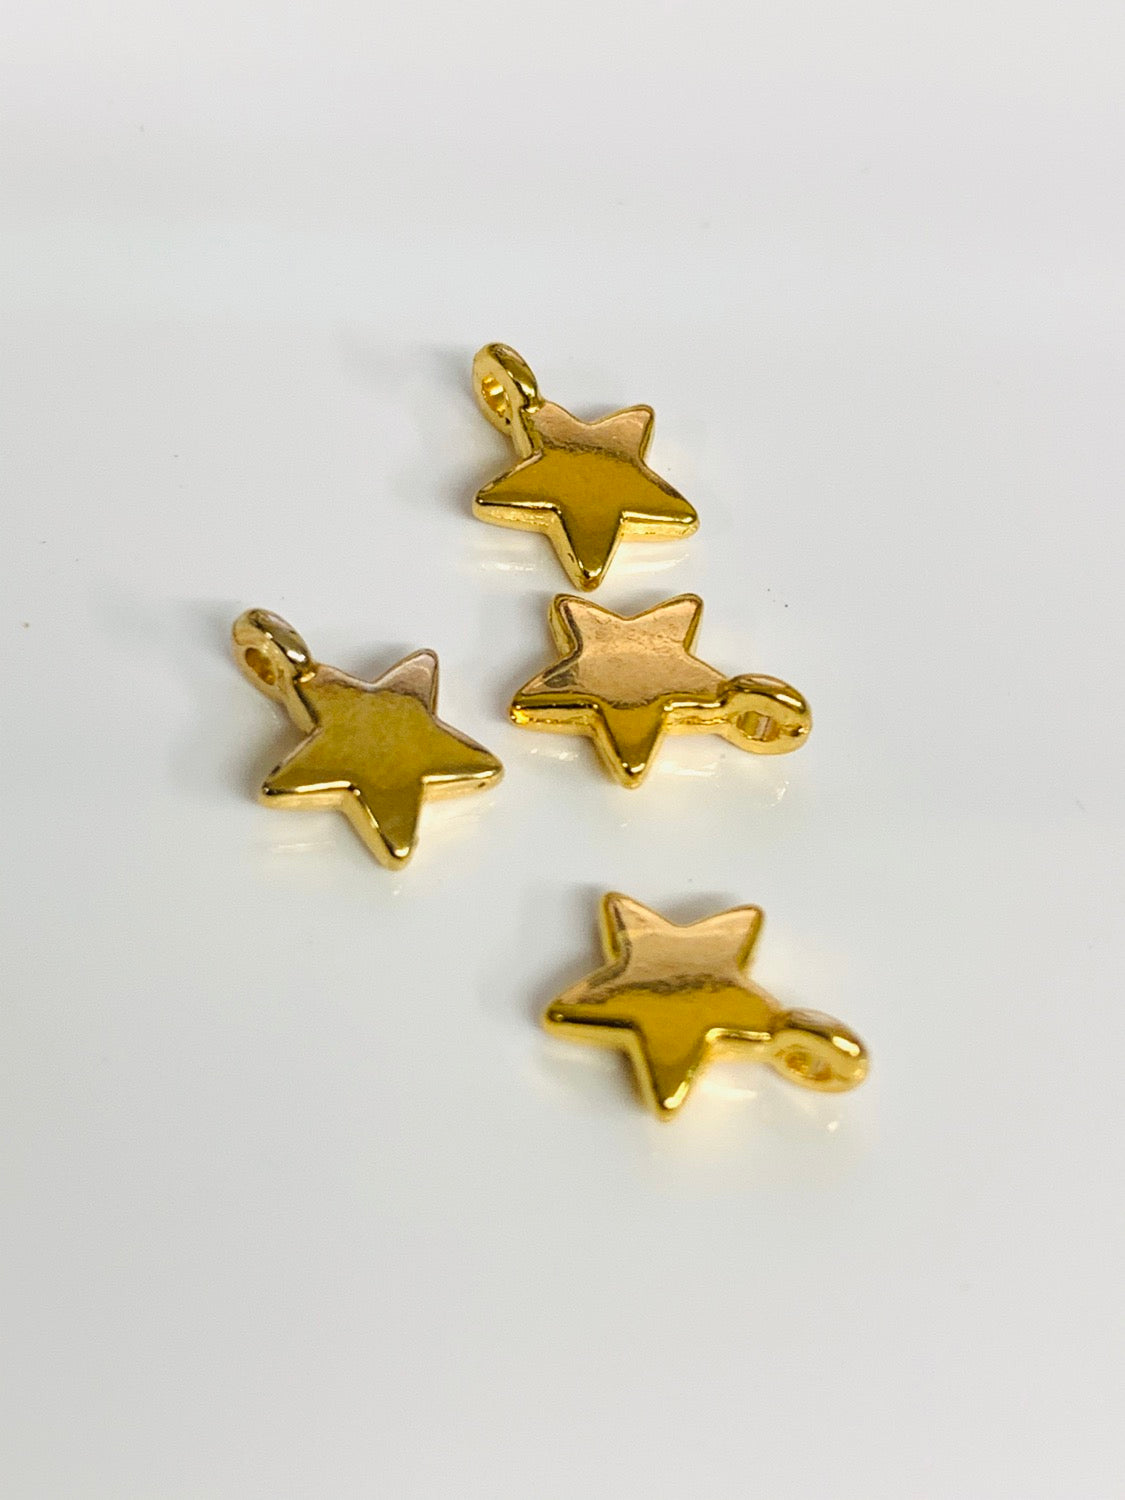 8mm star gold qty 4 / Star 20438/20439